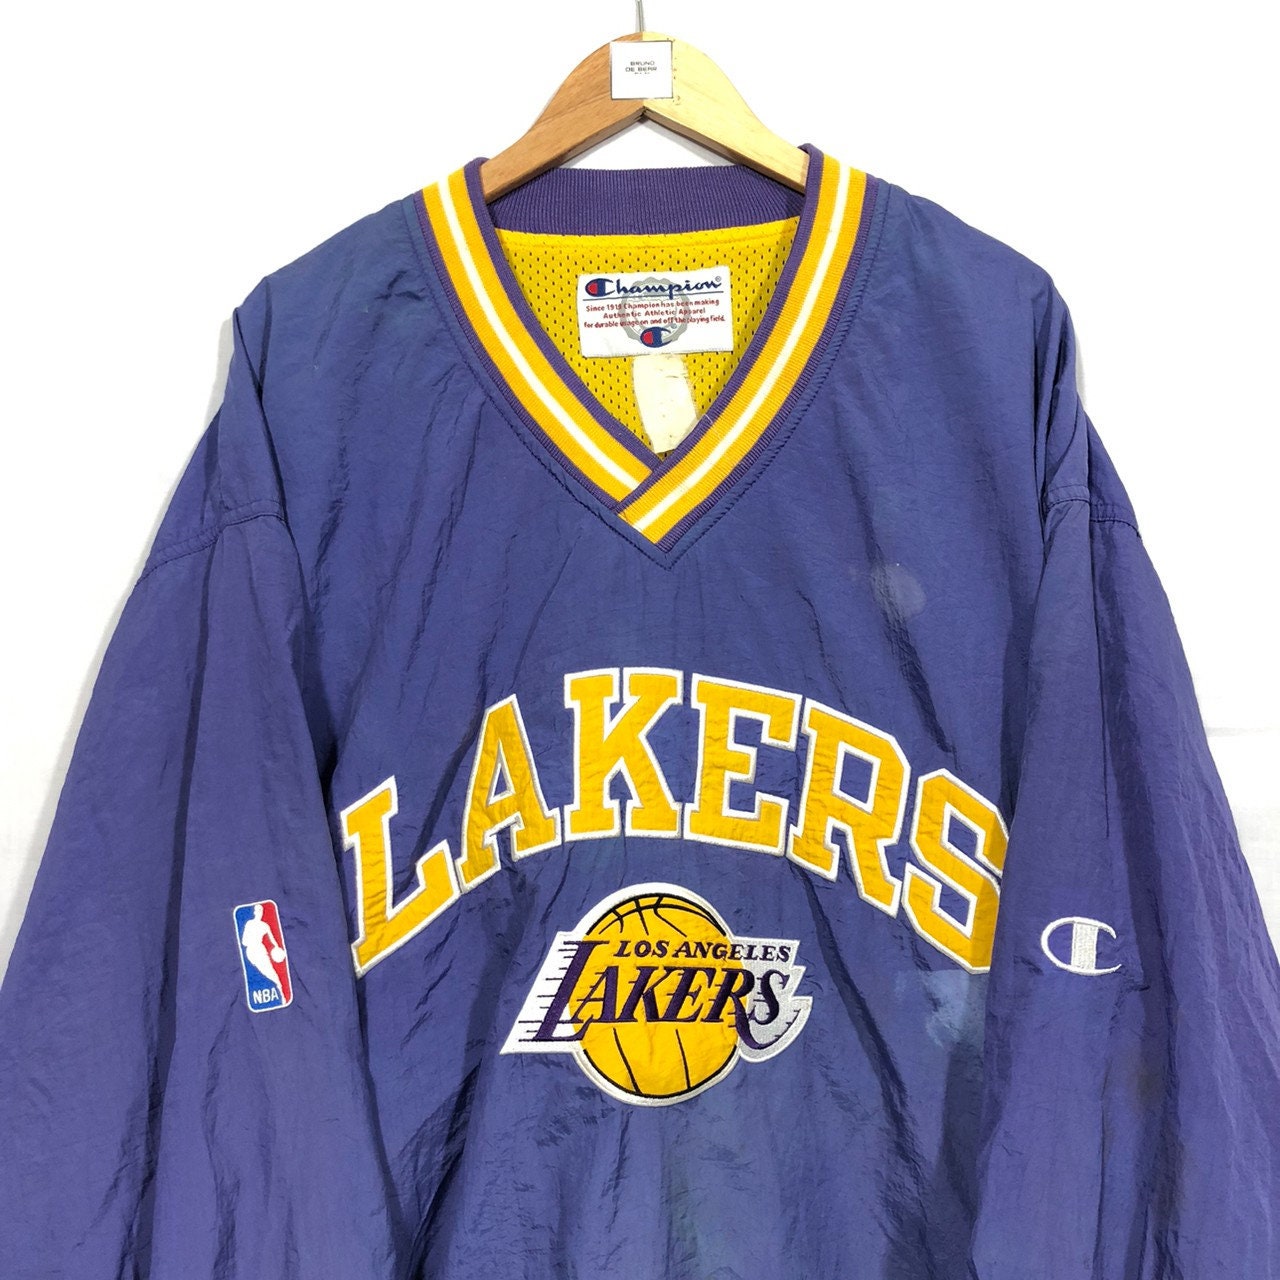 Vintage Los Angeles Lakers World Championships Graphic T Shirt 1985 Ye –  Black Shag Vintage